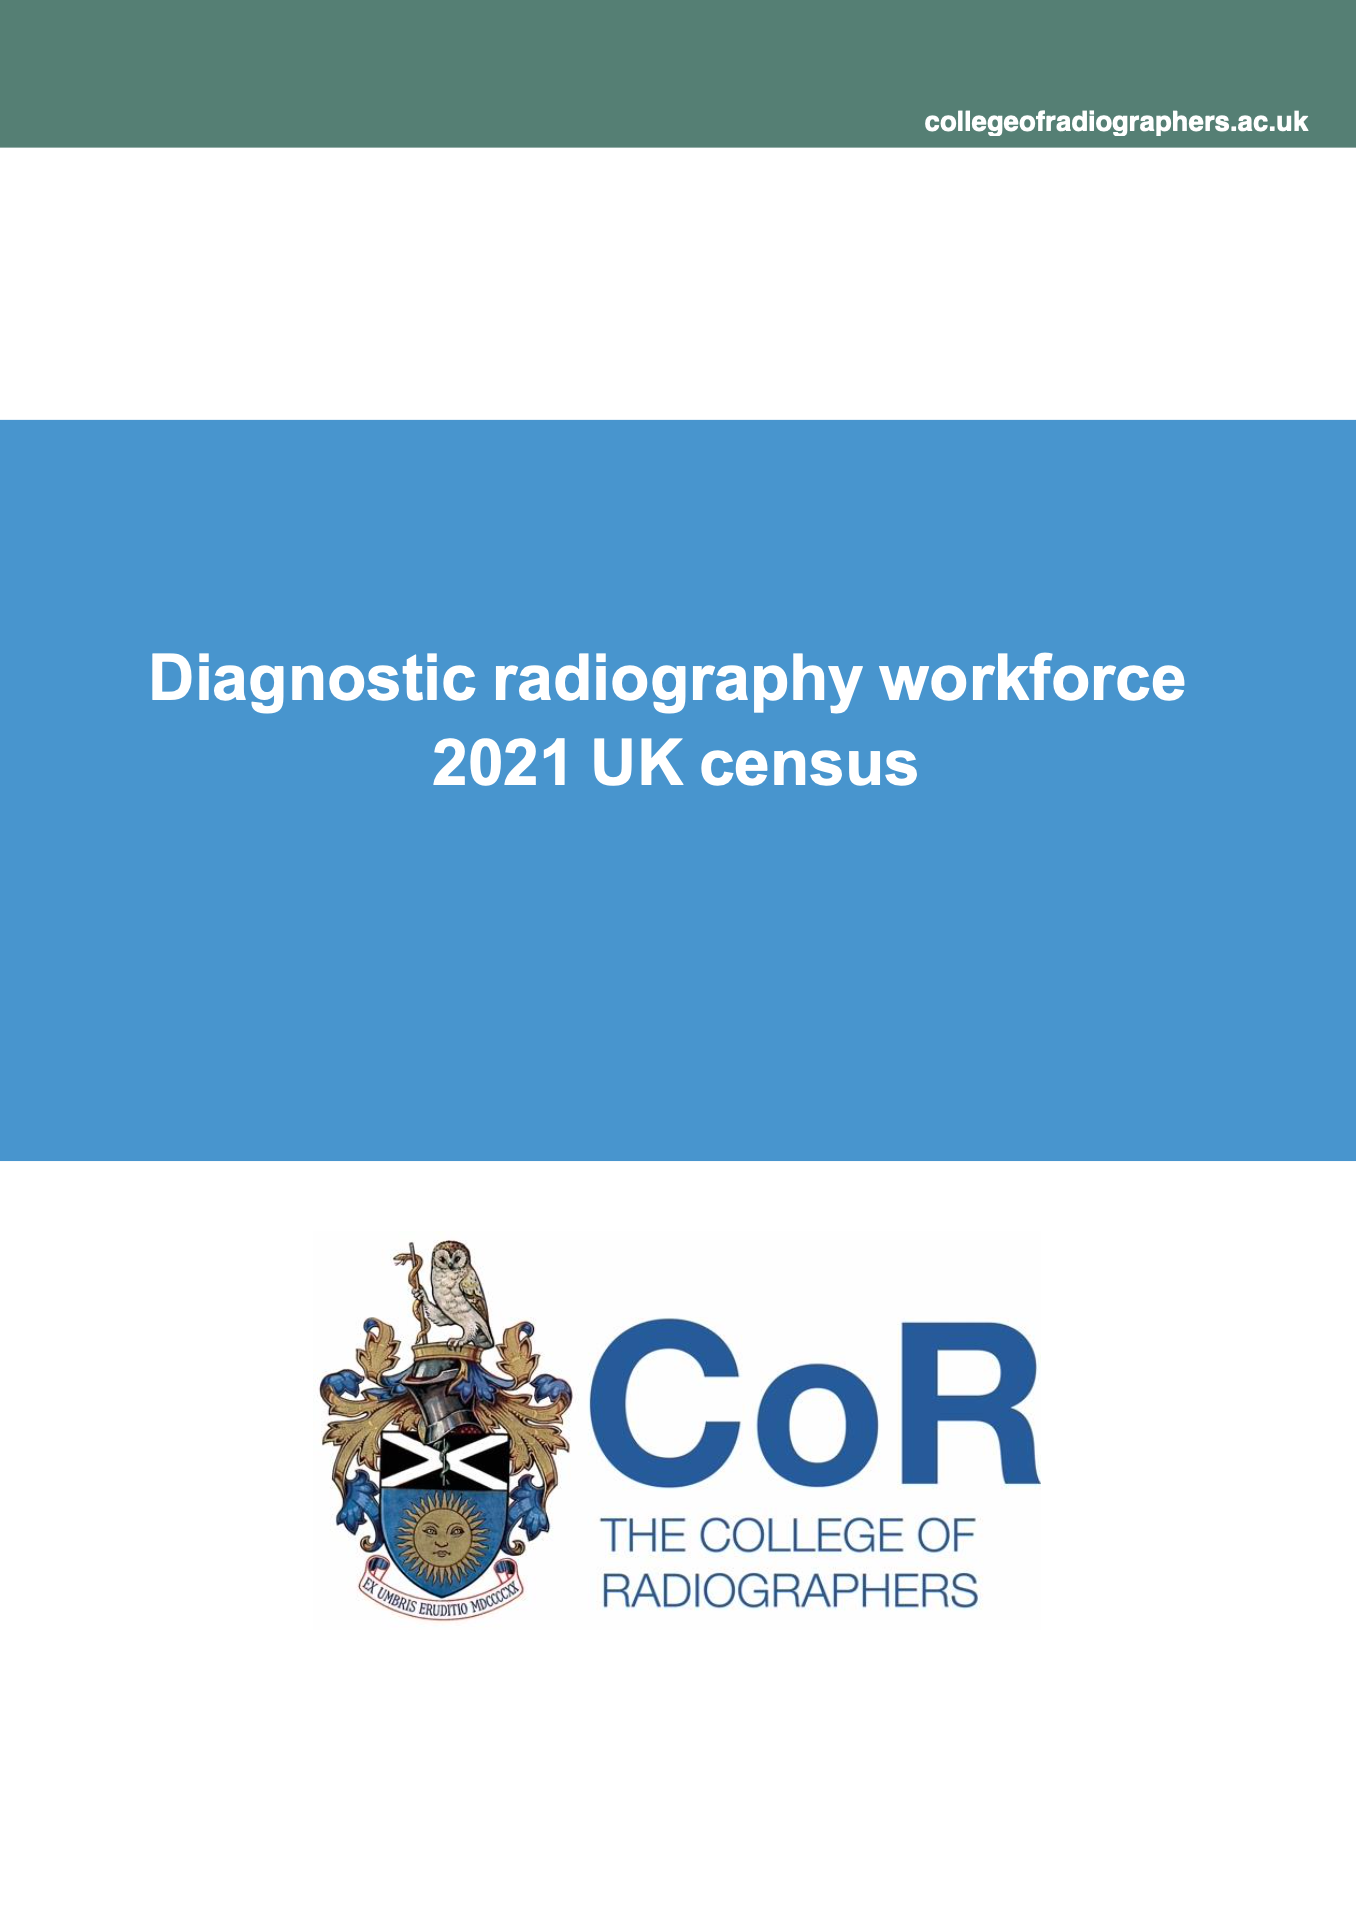 CoR Diagnostic Radiography Workforce UK Census 2021 Report